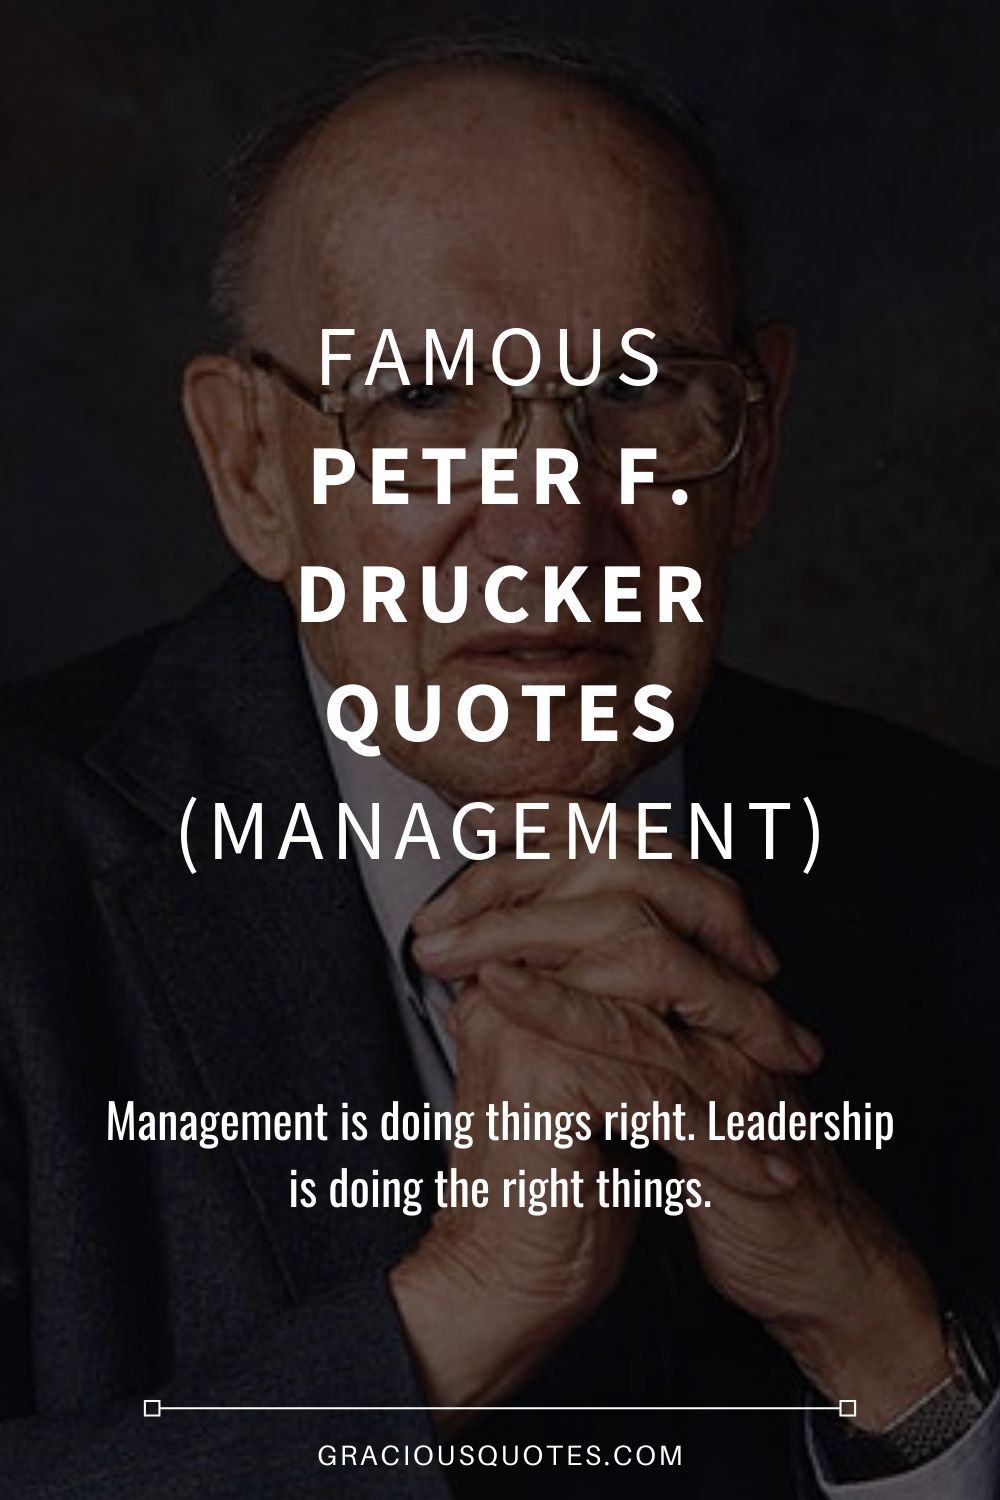 Famous Peter F. Drucker Quotes (MANAGEMENT) - Gracious Quotes